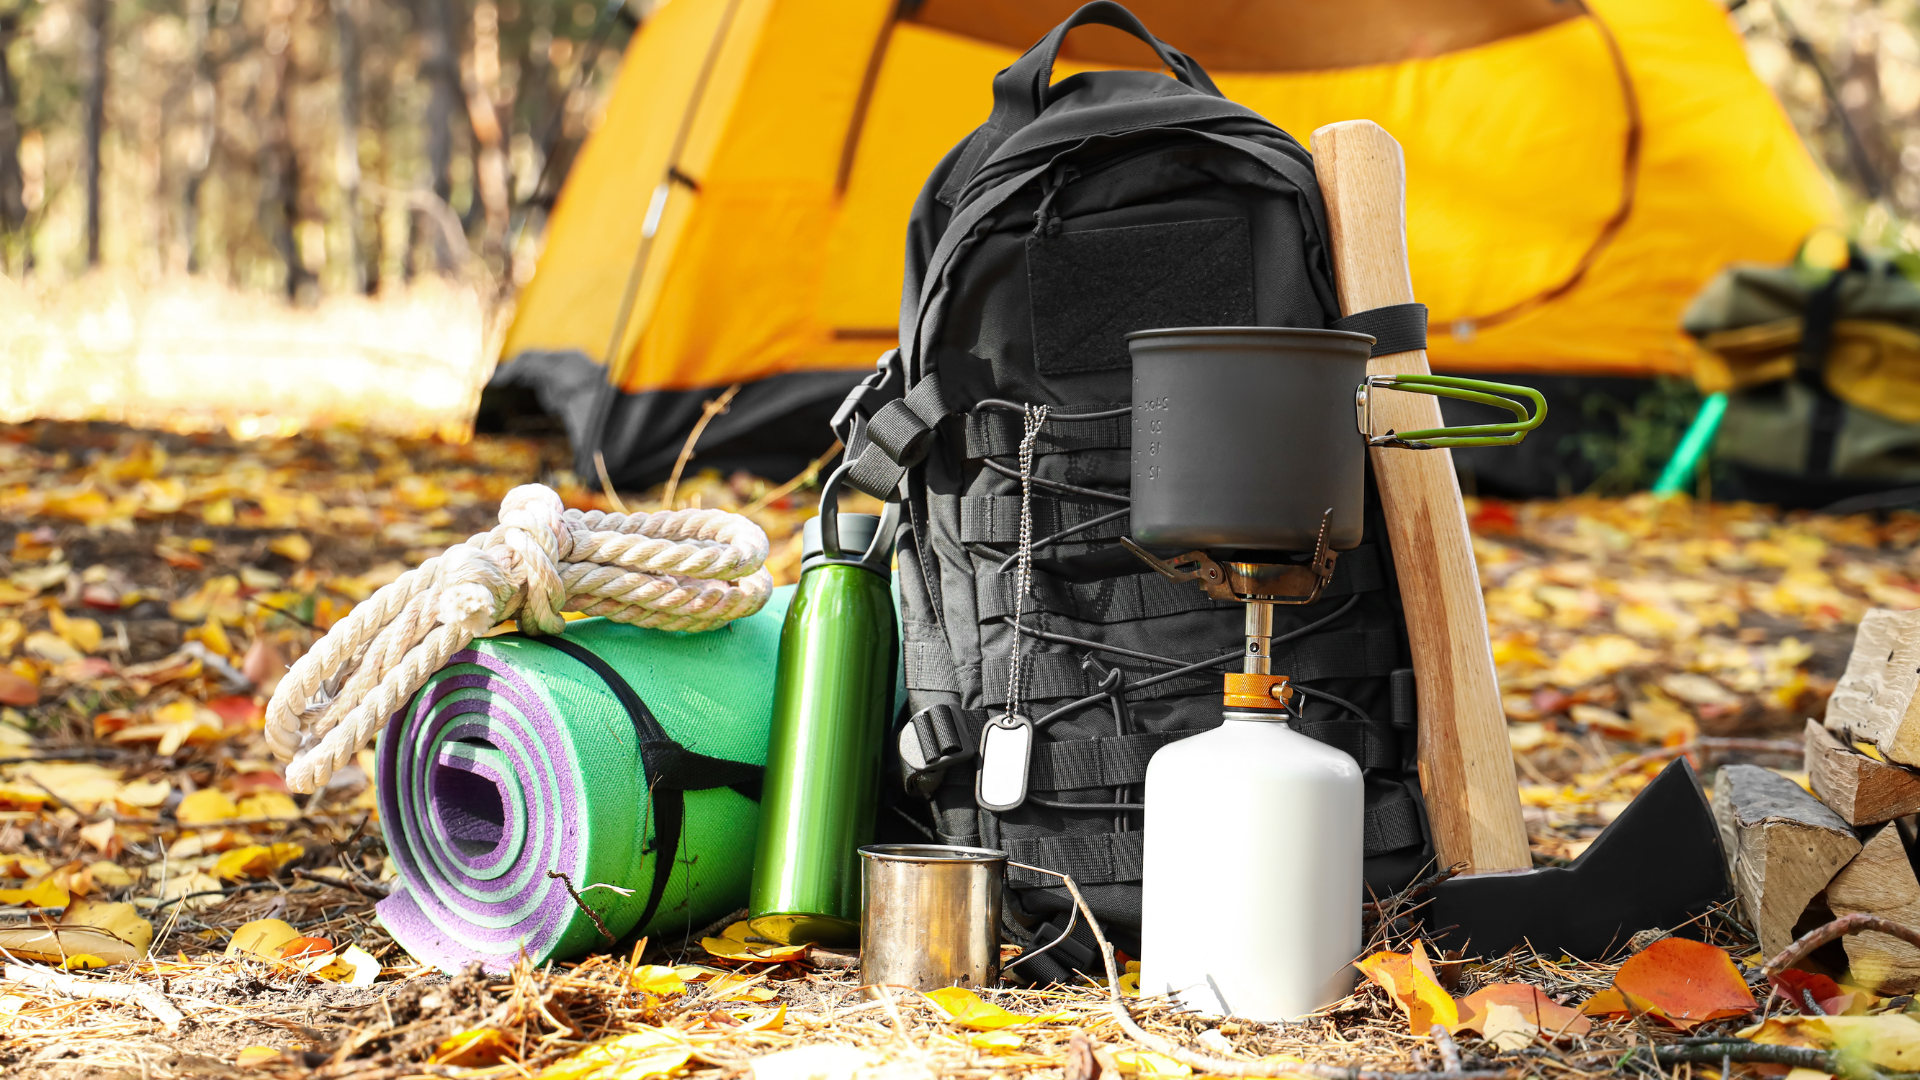 Survival gear at campsite